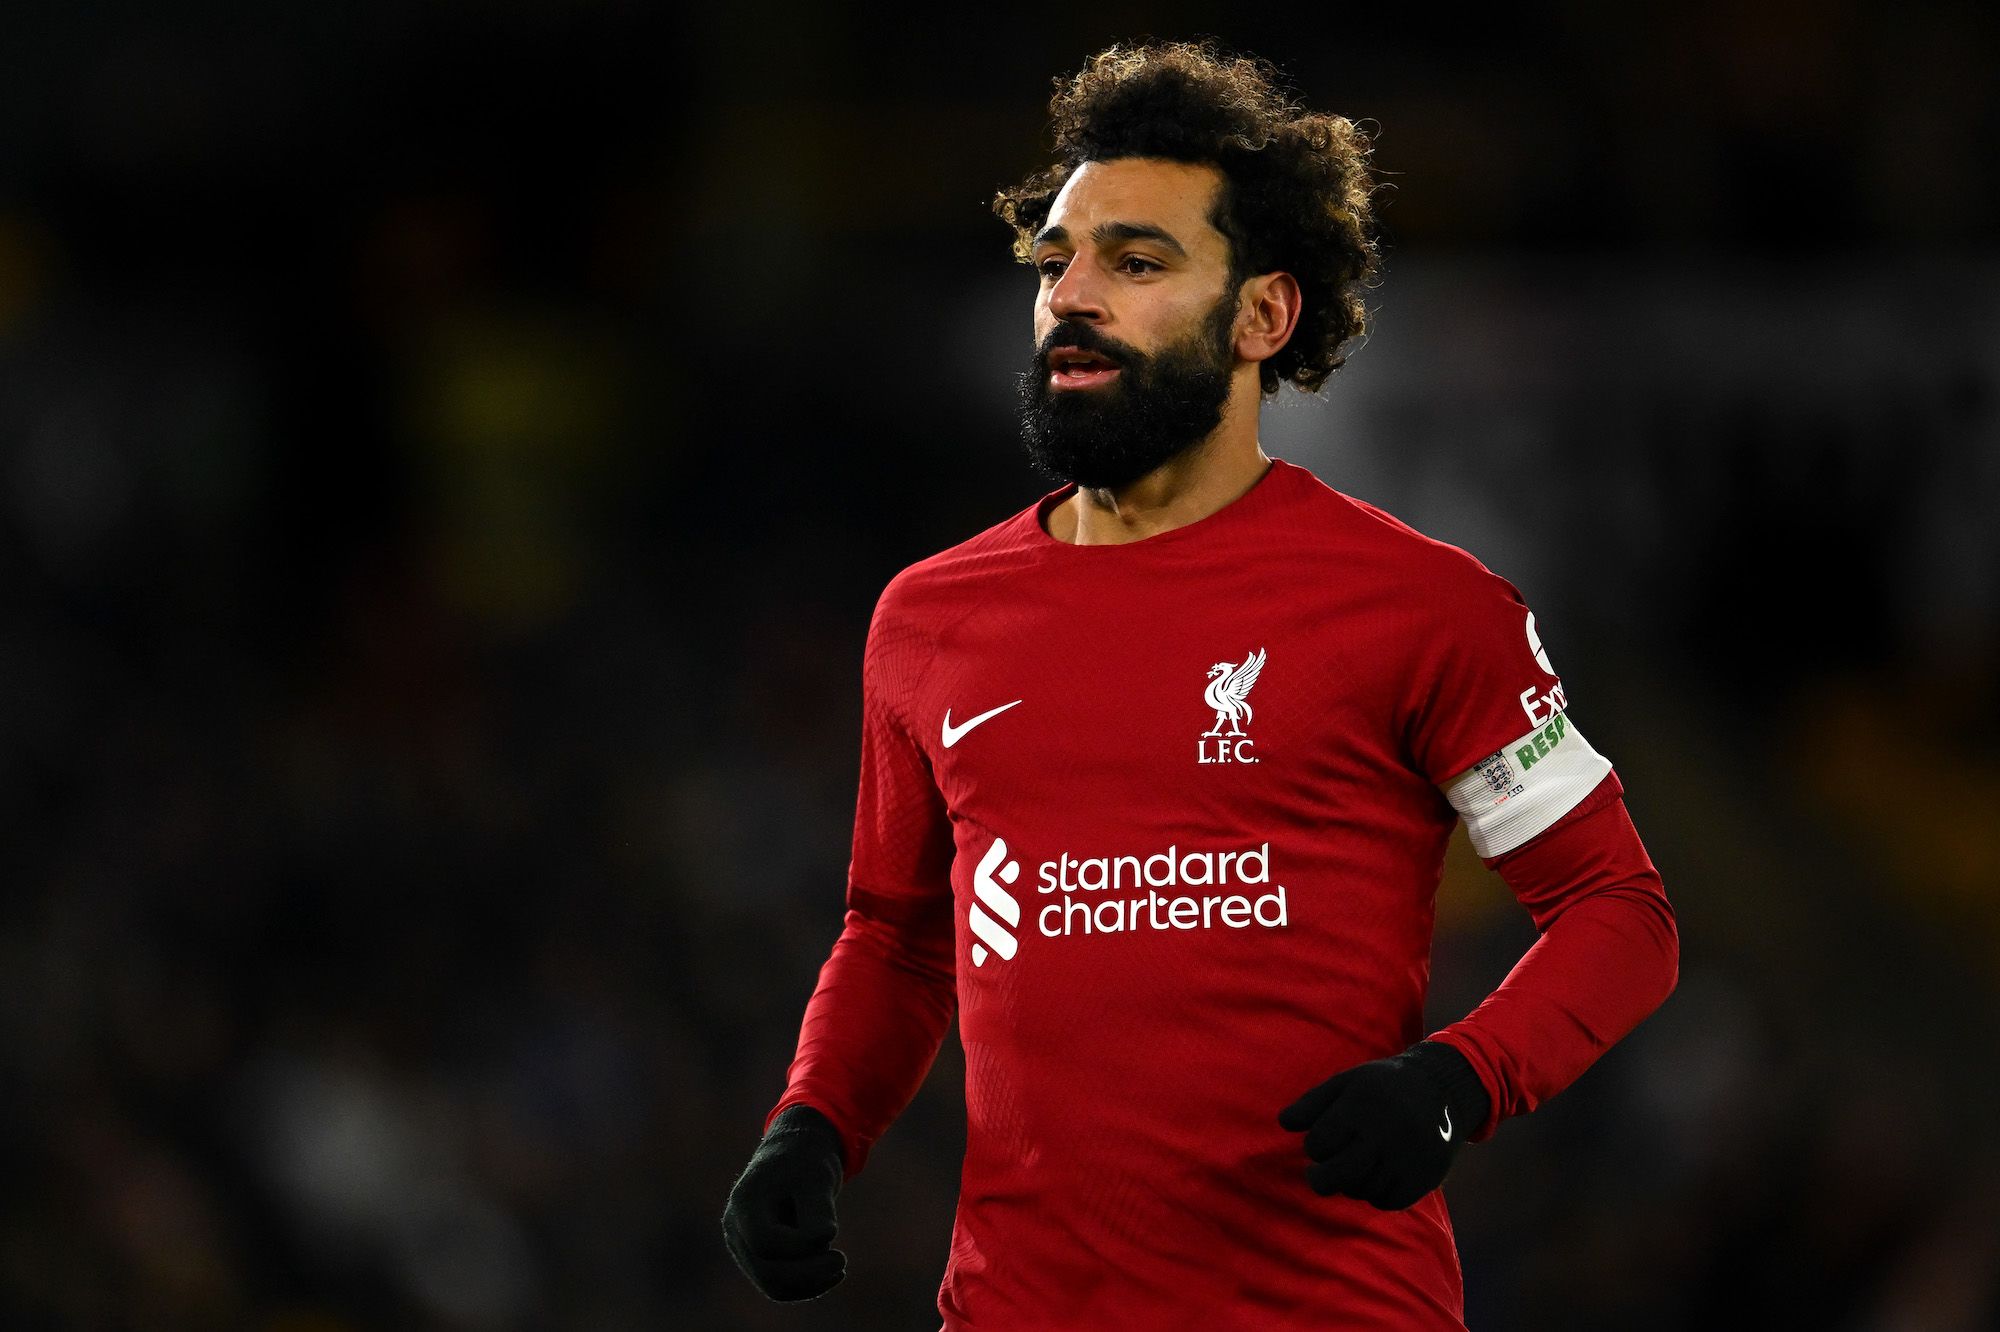 Liverpool manager Jurgen Klopp says Mohamed Salah is ‘suffering’ this season